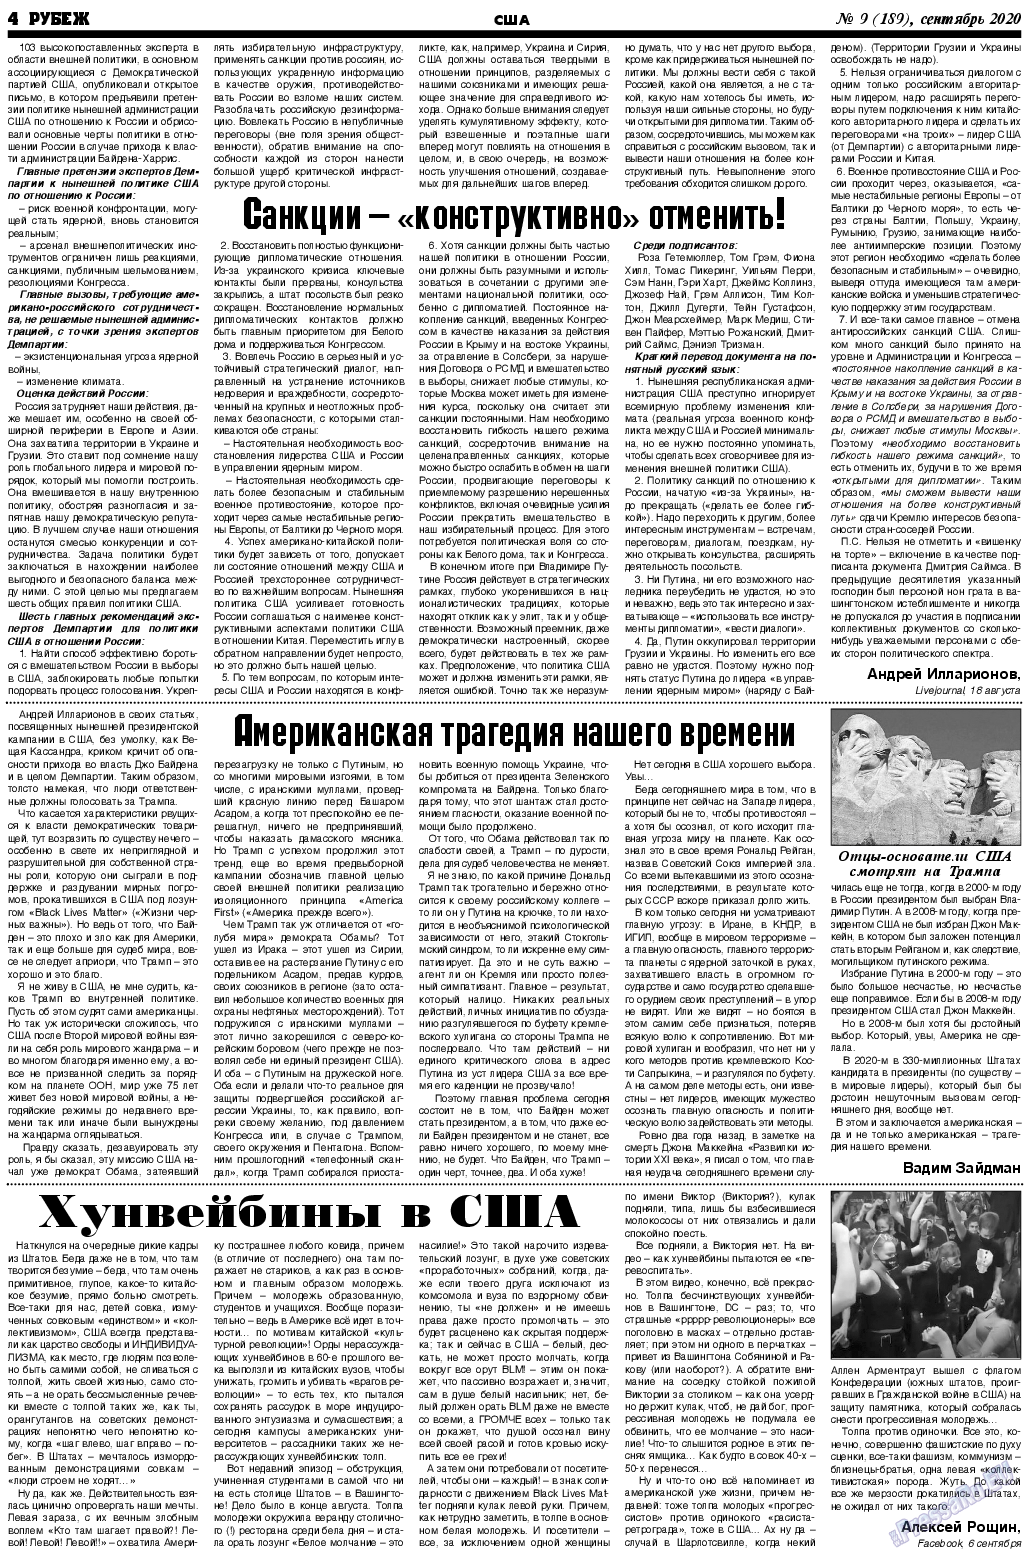 Рубеж, газета. 2020 №9 стр.4